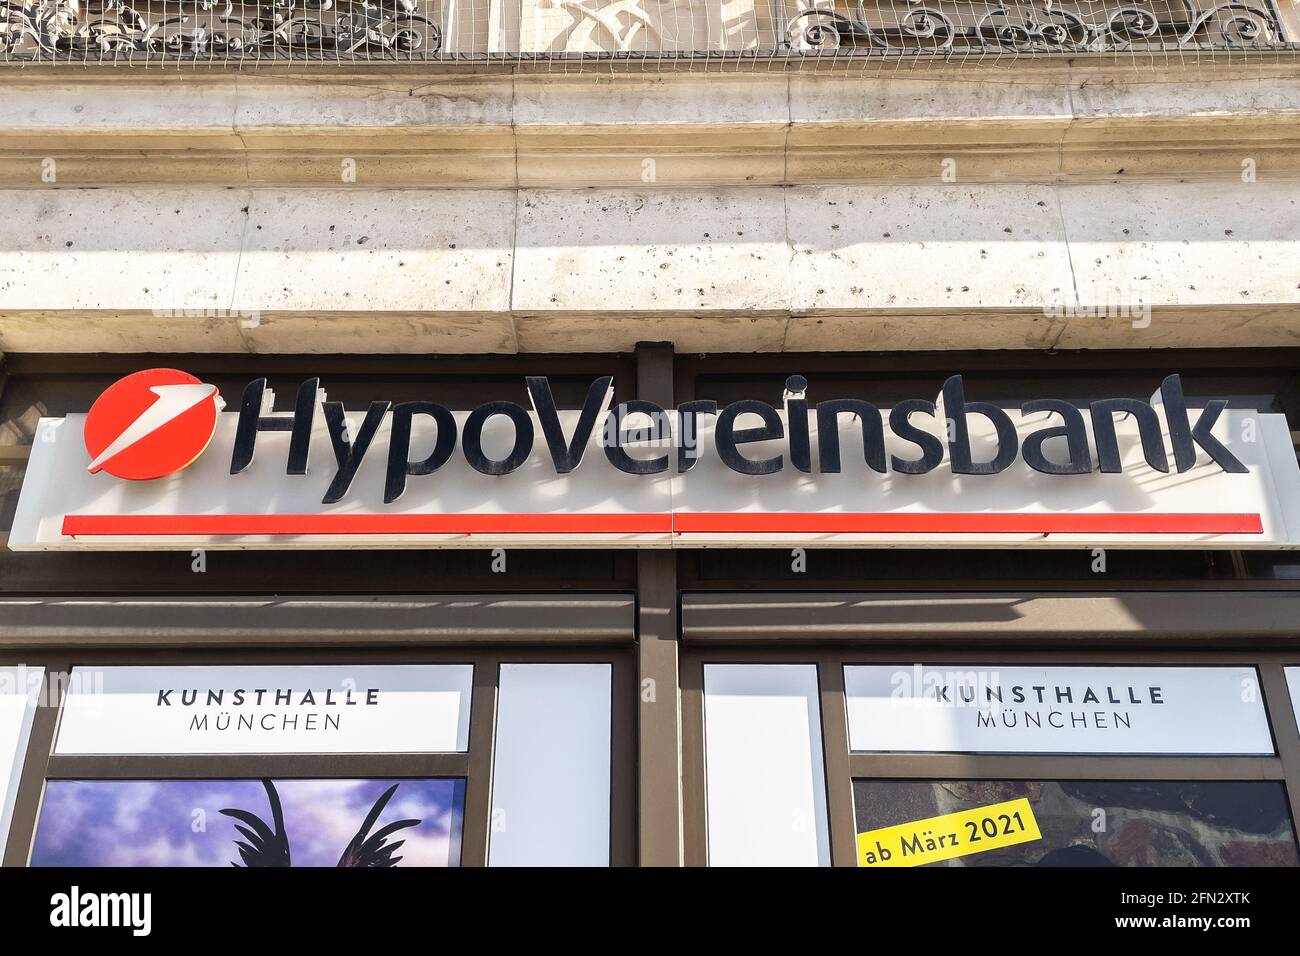 Hypovereinsbank sign Stock Photo